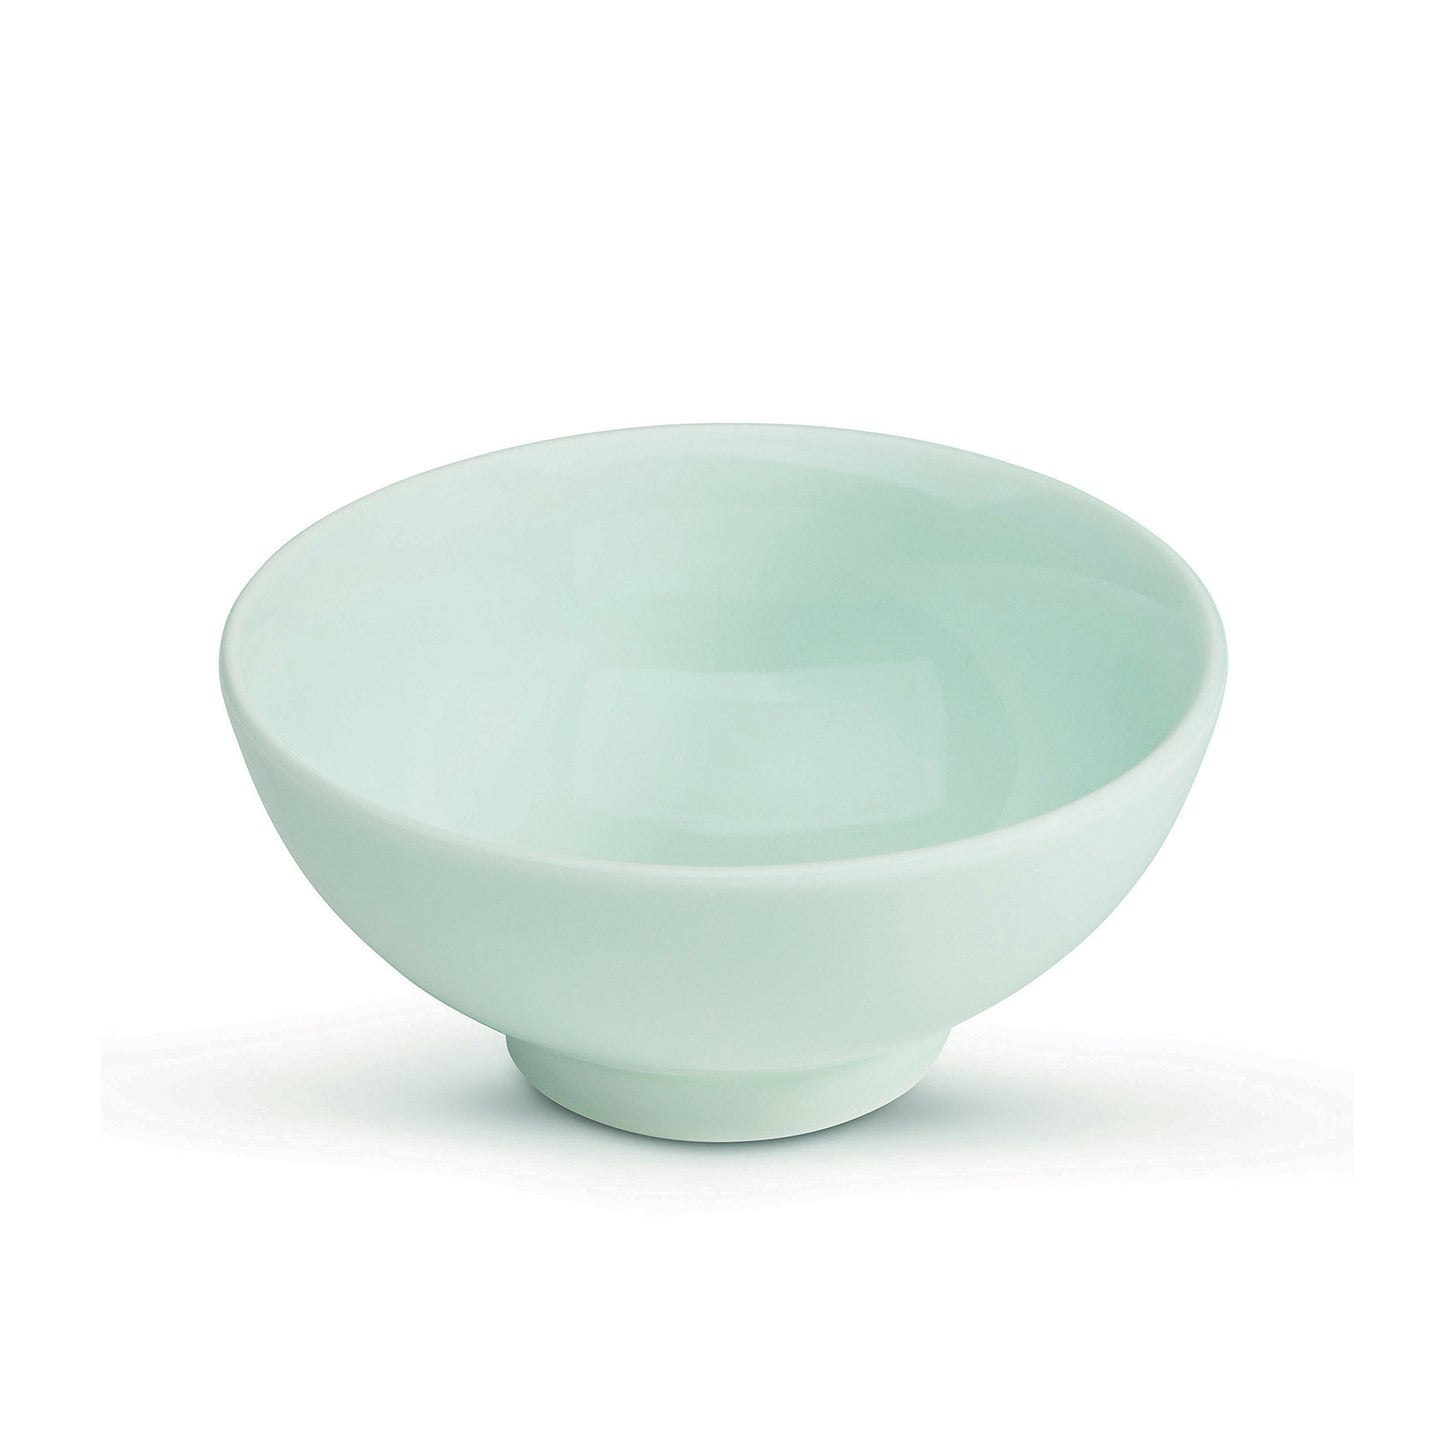 4.75" green celadon porcelain bowl, small bowl, rice bowl, 45 degree angel view, media 3 of 4